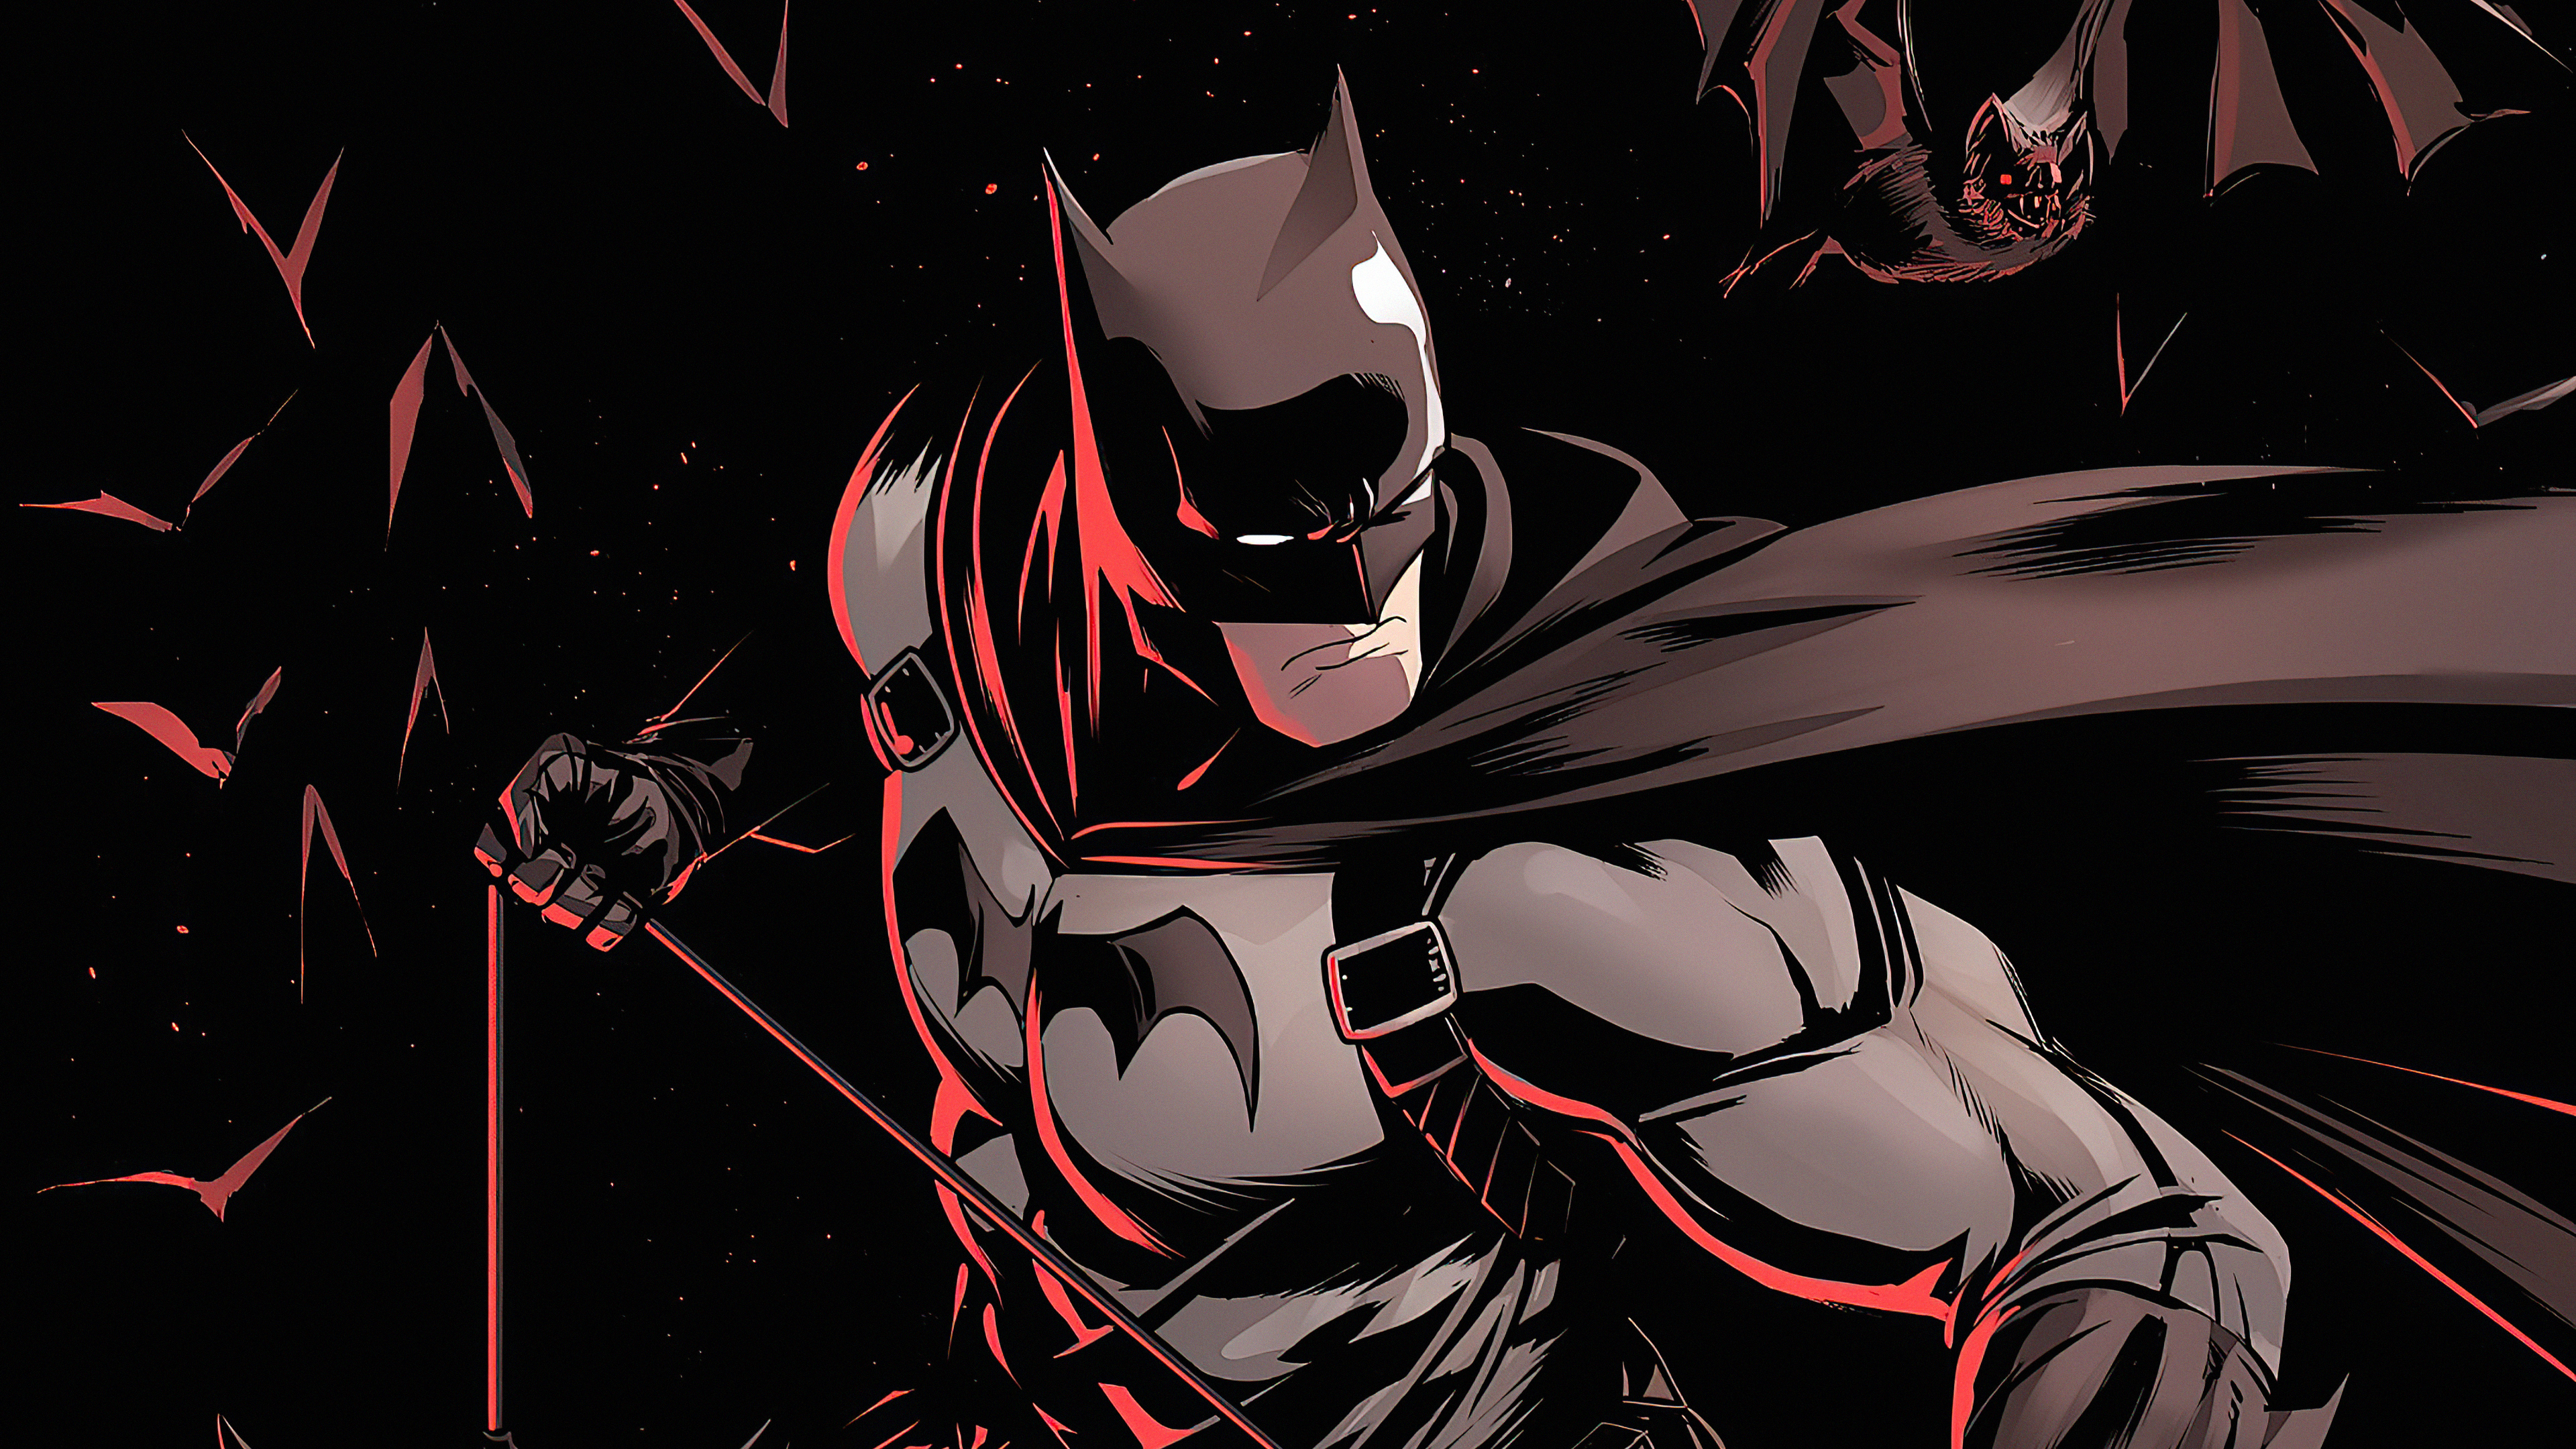 Batman 2020 DC Art Wallpaper, HD Superheroes 4K Wallpapers, Images